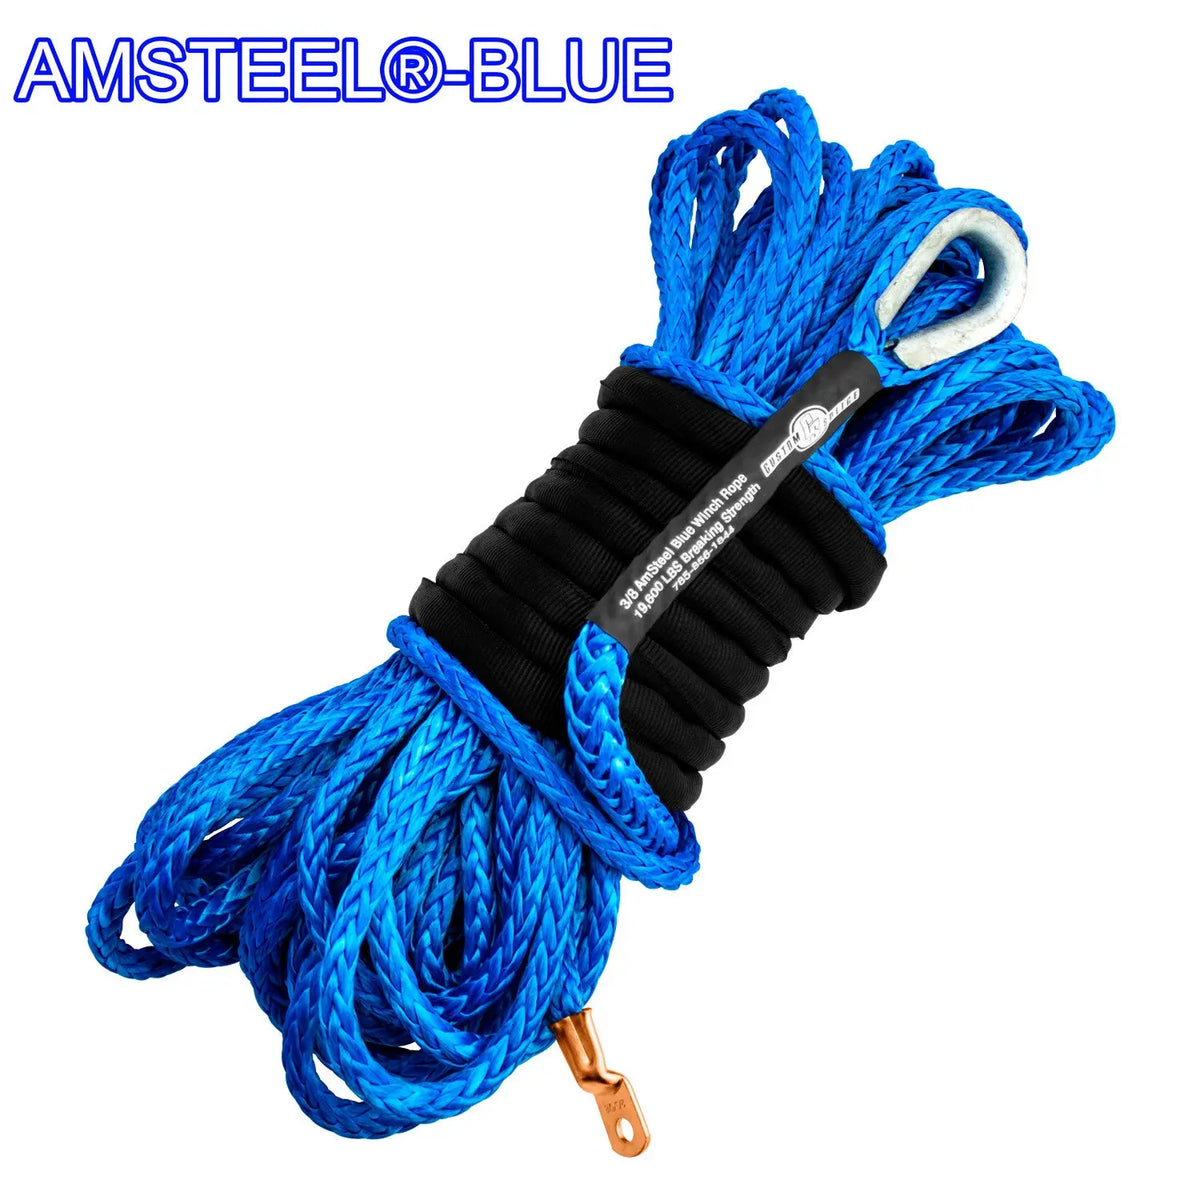 3/8 Extension - AmSteel Blue Winch Rope – Custom Splice